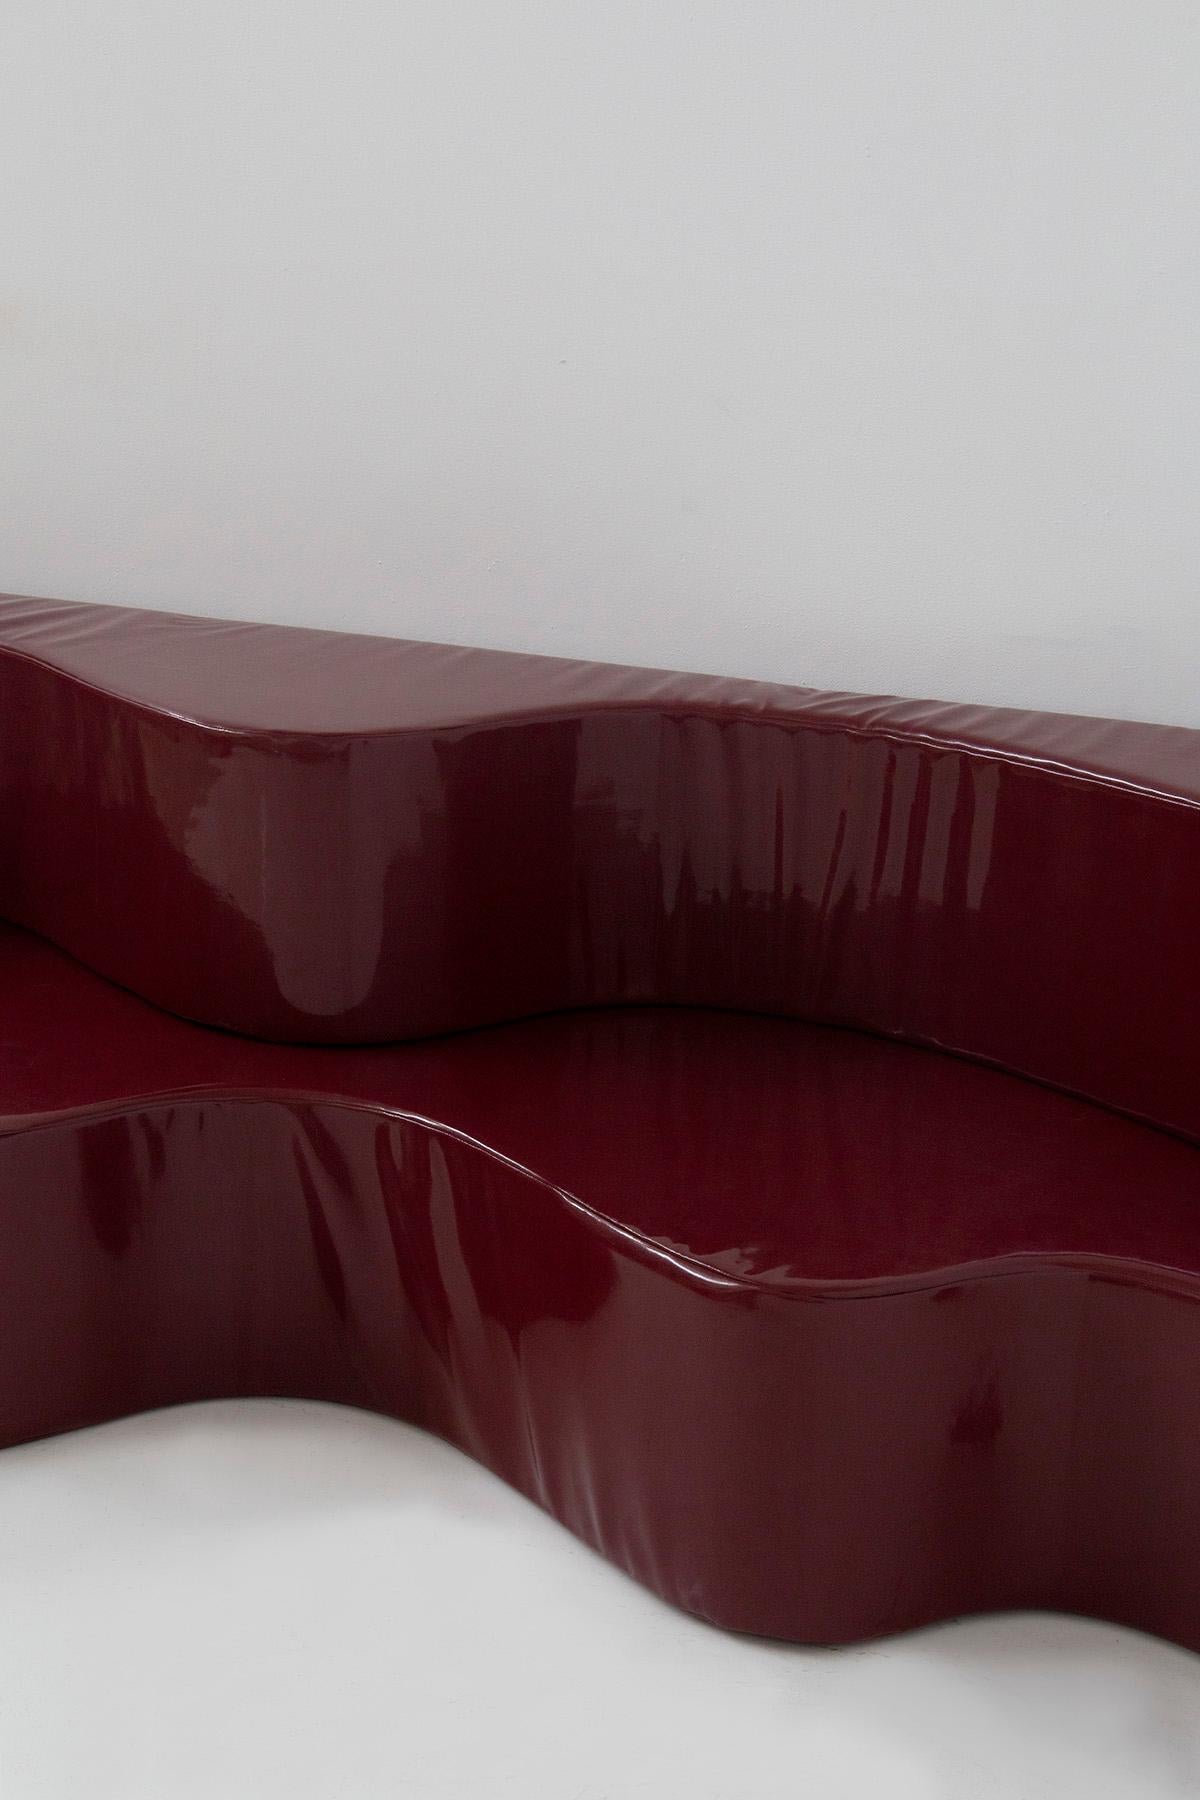 Space Age Superonda sofa Archizoom Poltronova in Vinyl Color amaranth